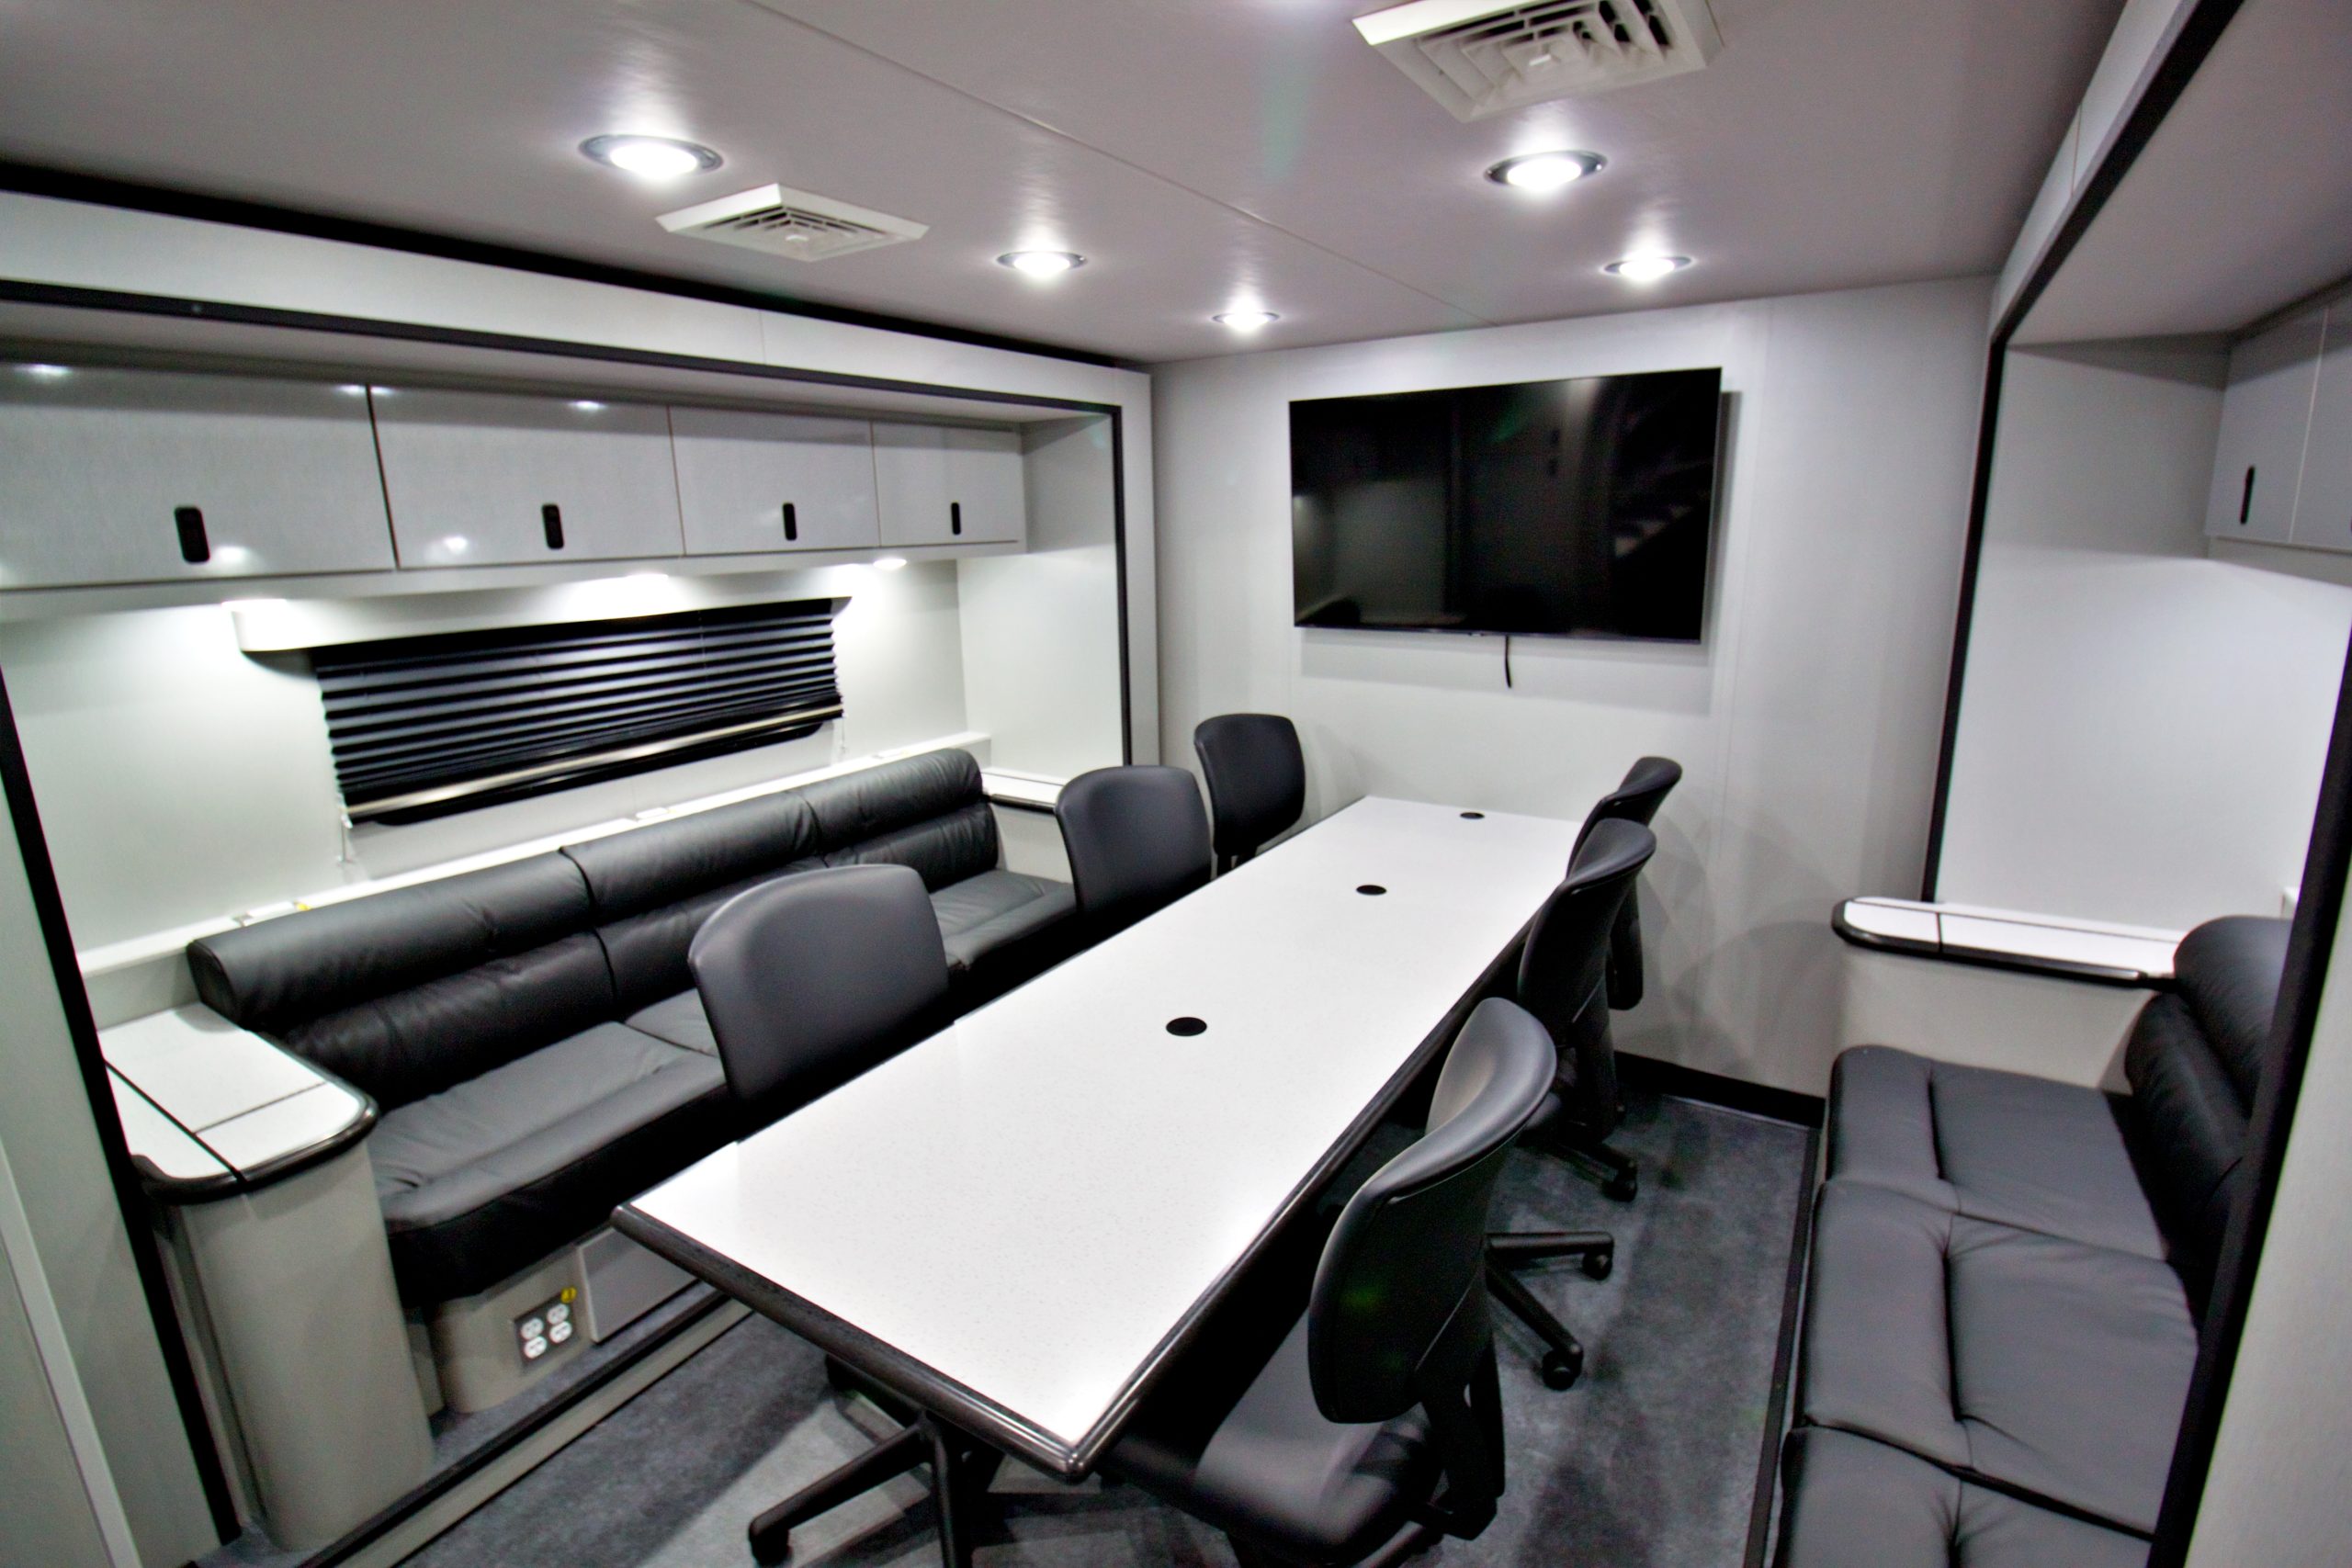 Interior of GM mobile office trailer